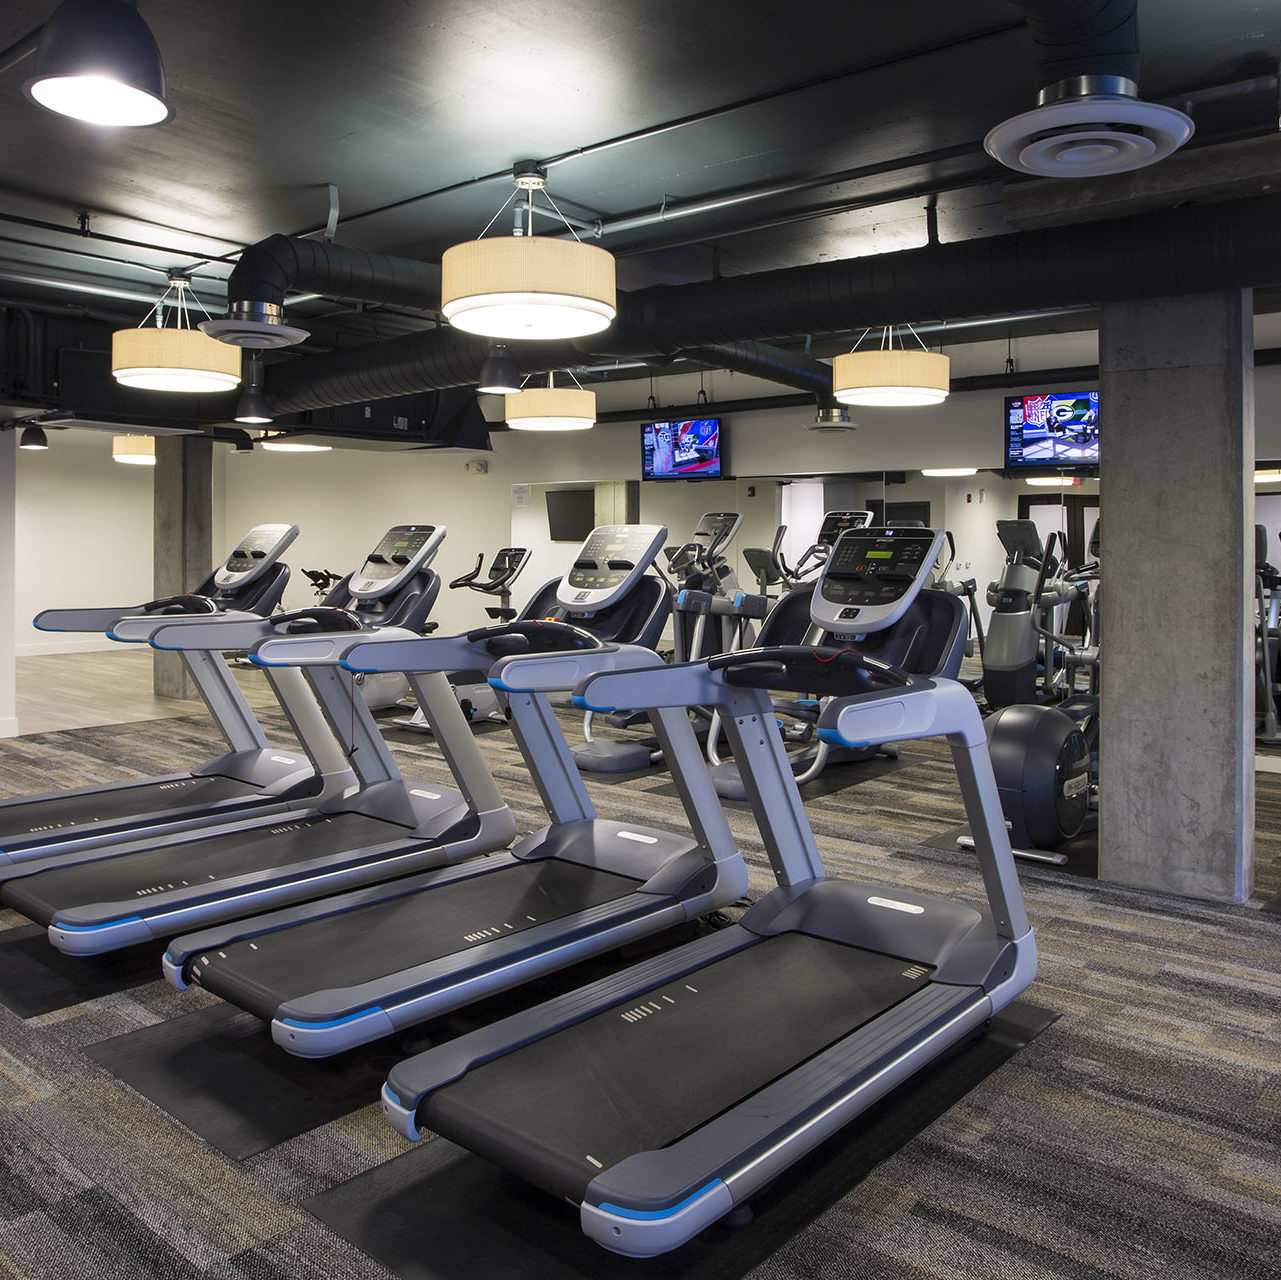 27 North - Fitness Center Cardio